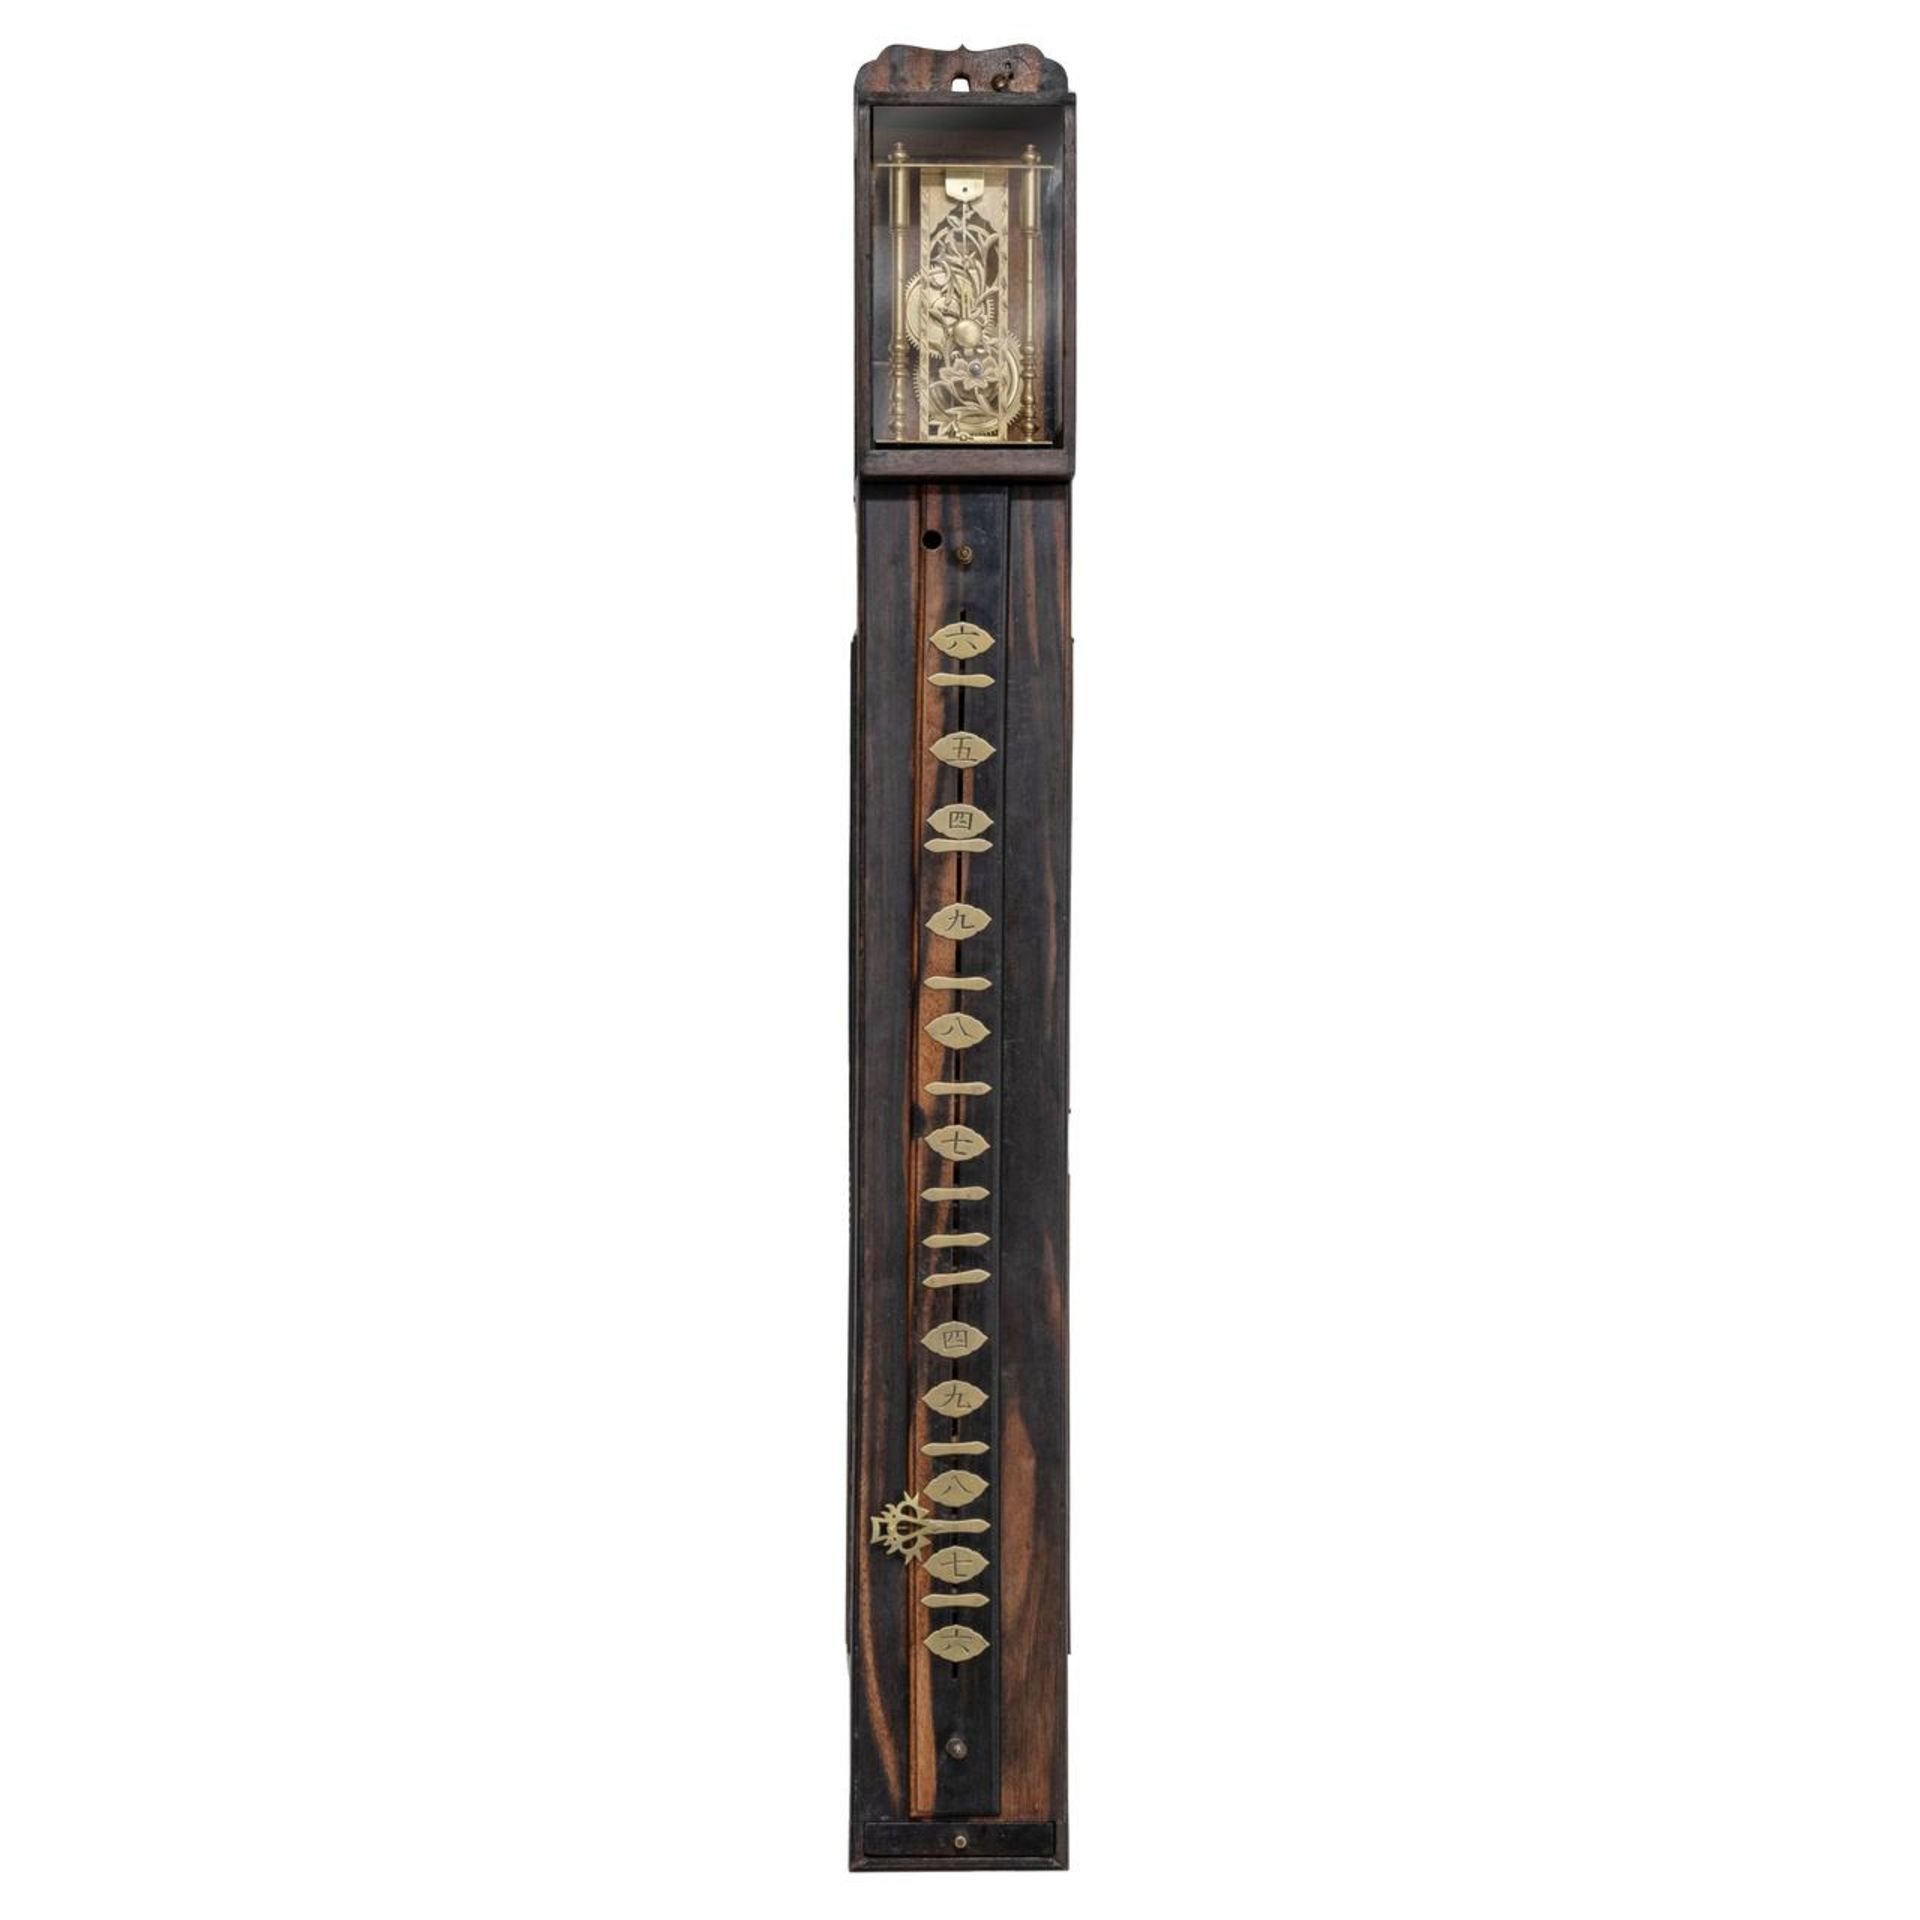 An elegant late Edo / 19thC Japanese Shaku-dokei Pillar Clock, H 70 - W 8,3 cm